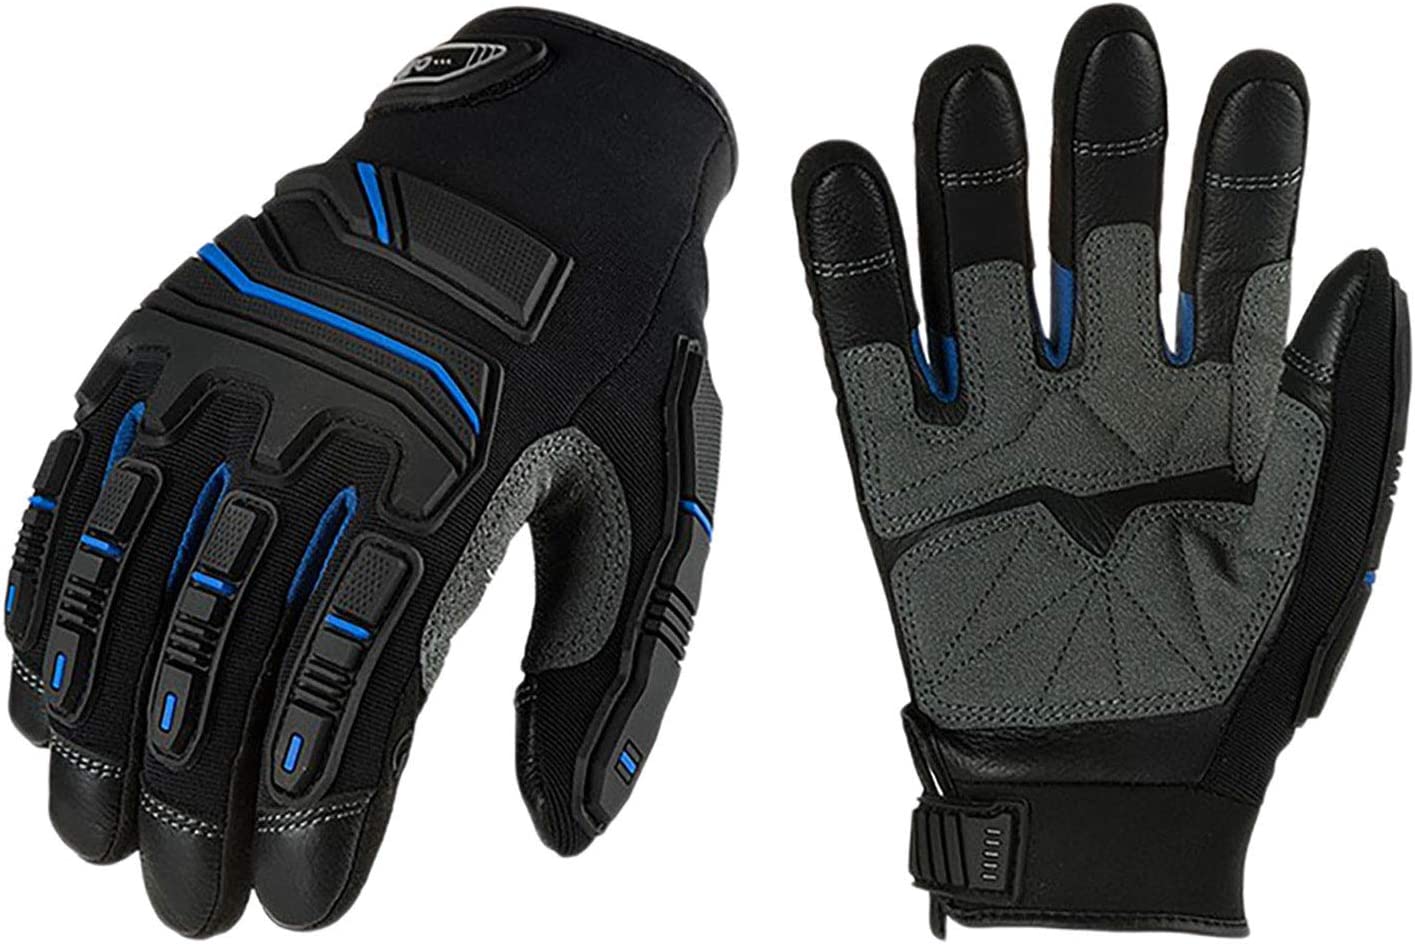 Vgo | Grain Cowhide Leather Touchscreen Compatible Heavy Duty Mechanic Work Gloves (Size M, Blue, CA9730HL)